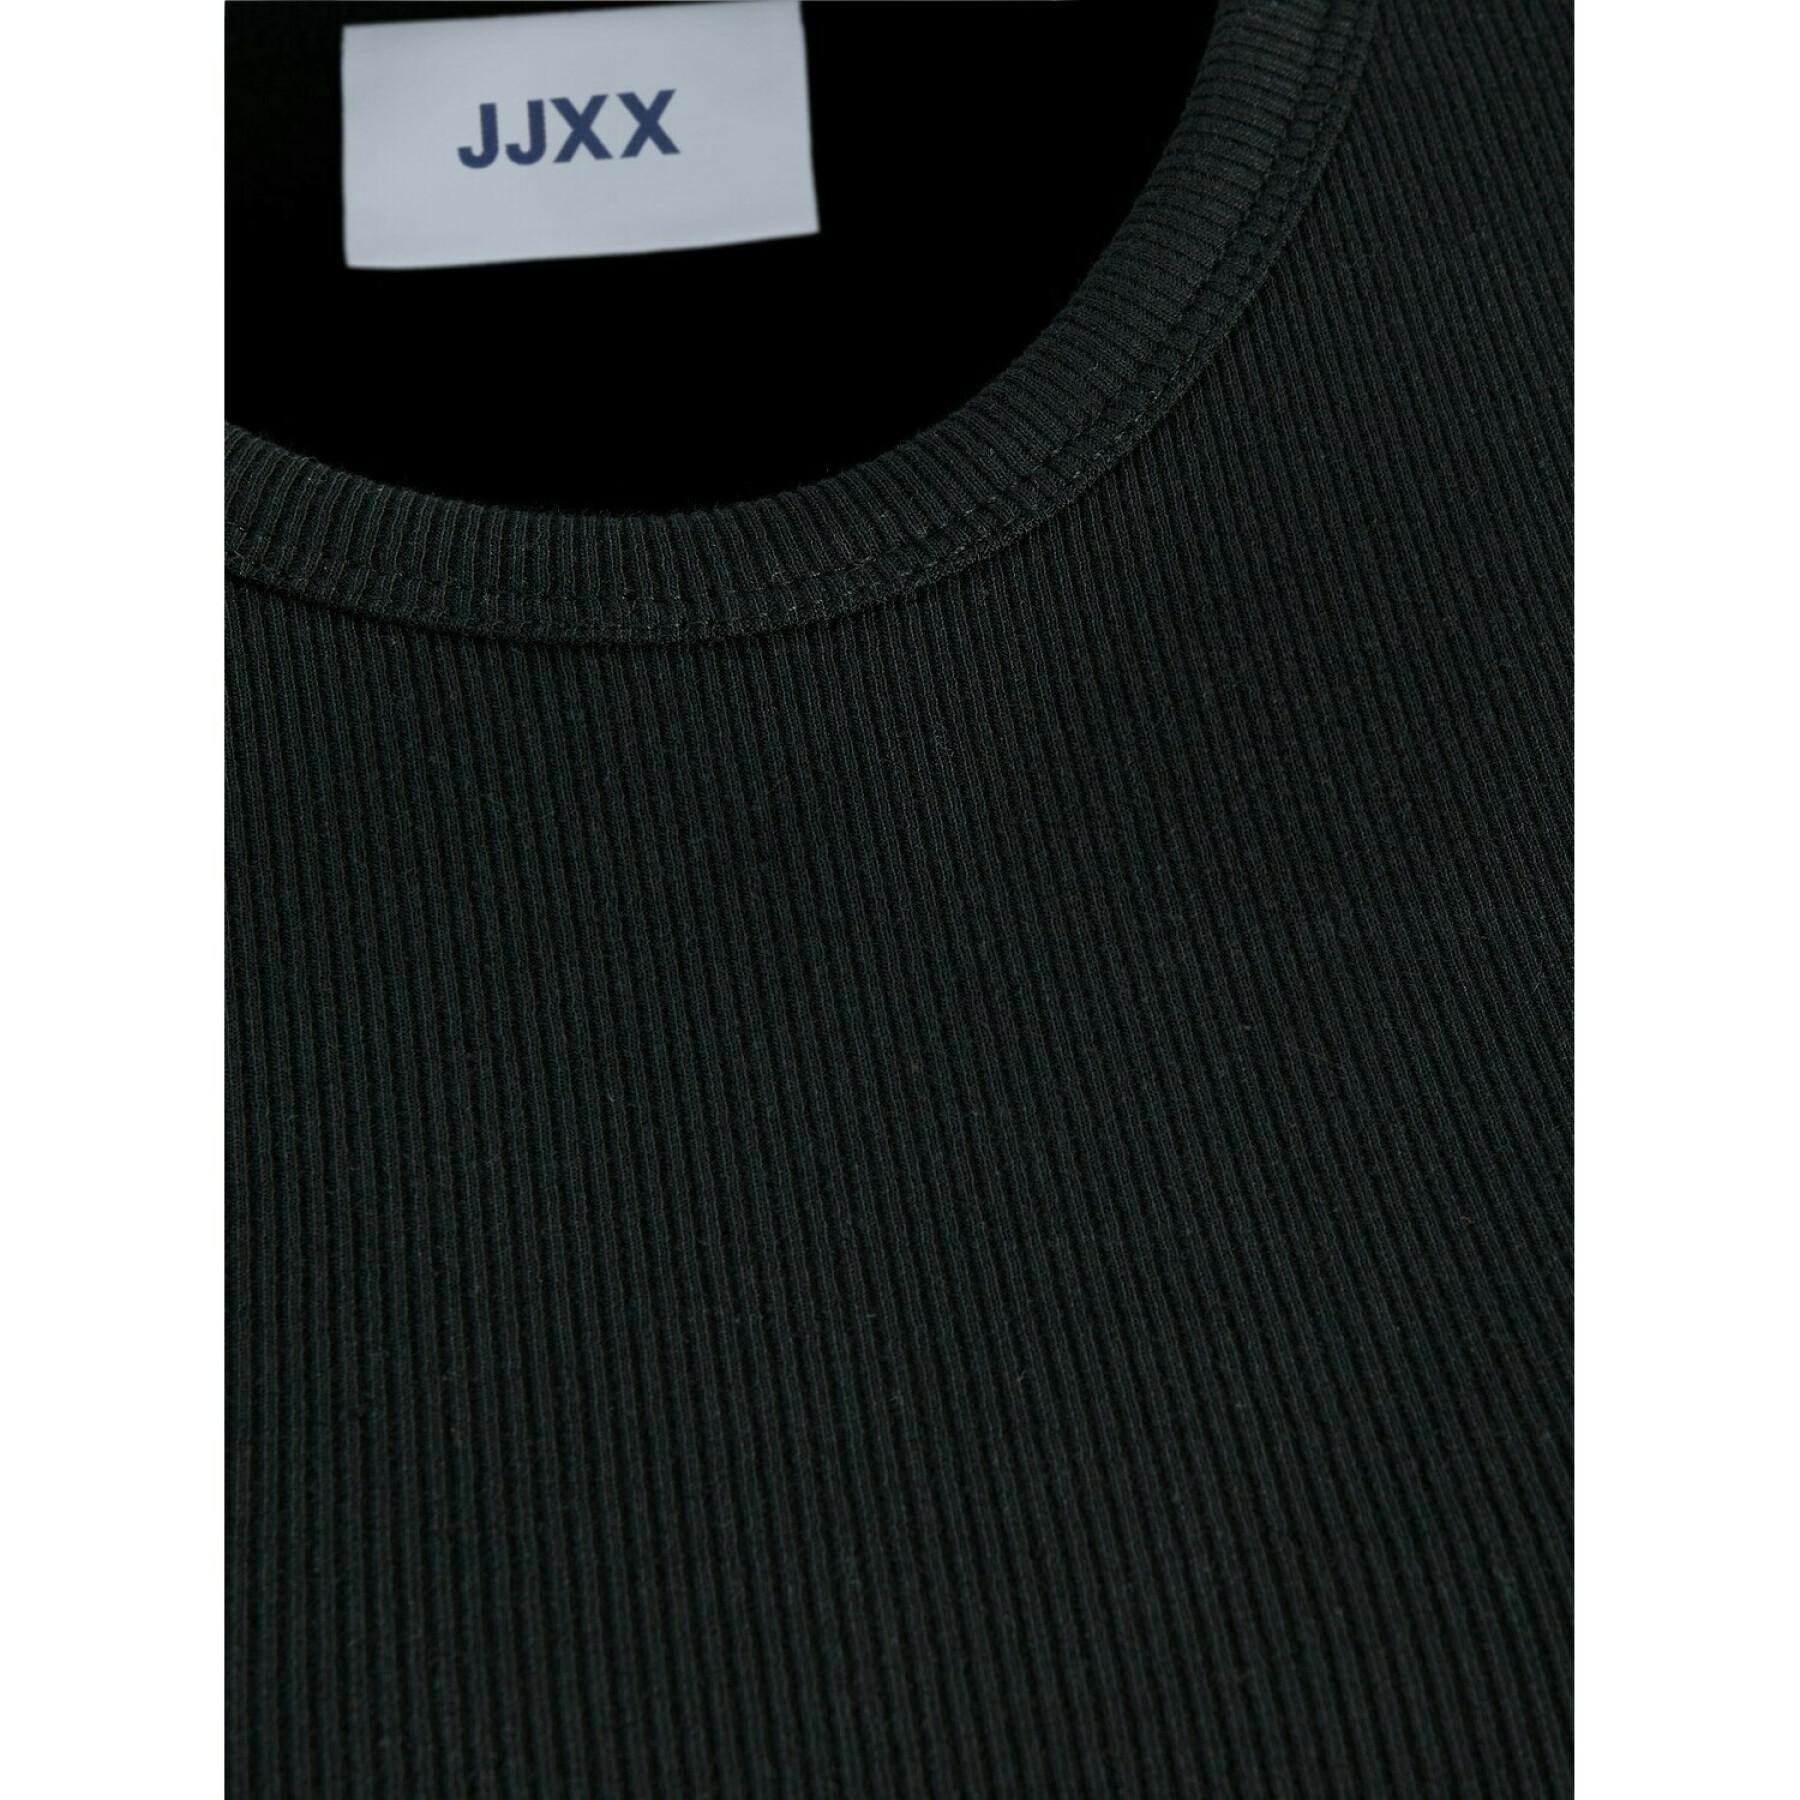 Camiseta de mujer JJXX freya